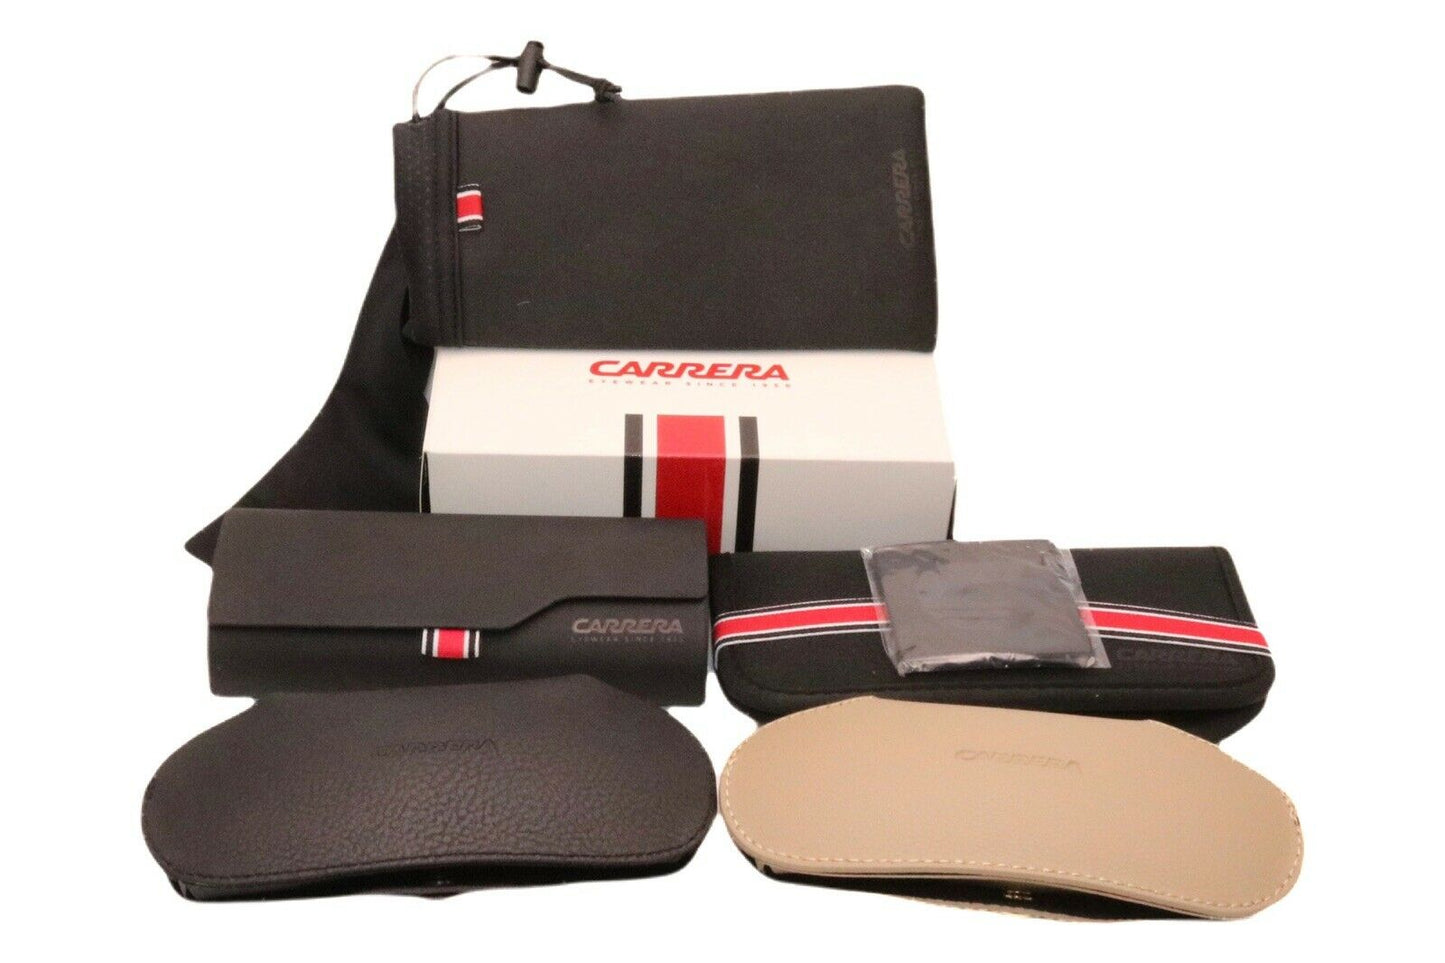 Carrera CARRERA 8862-0003 00 57mm New Eyeglasses